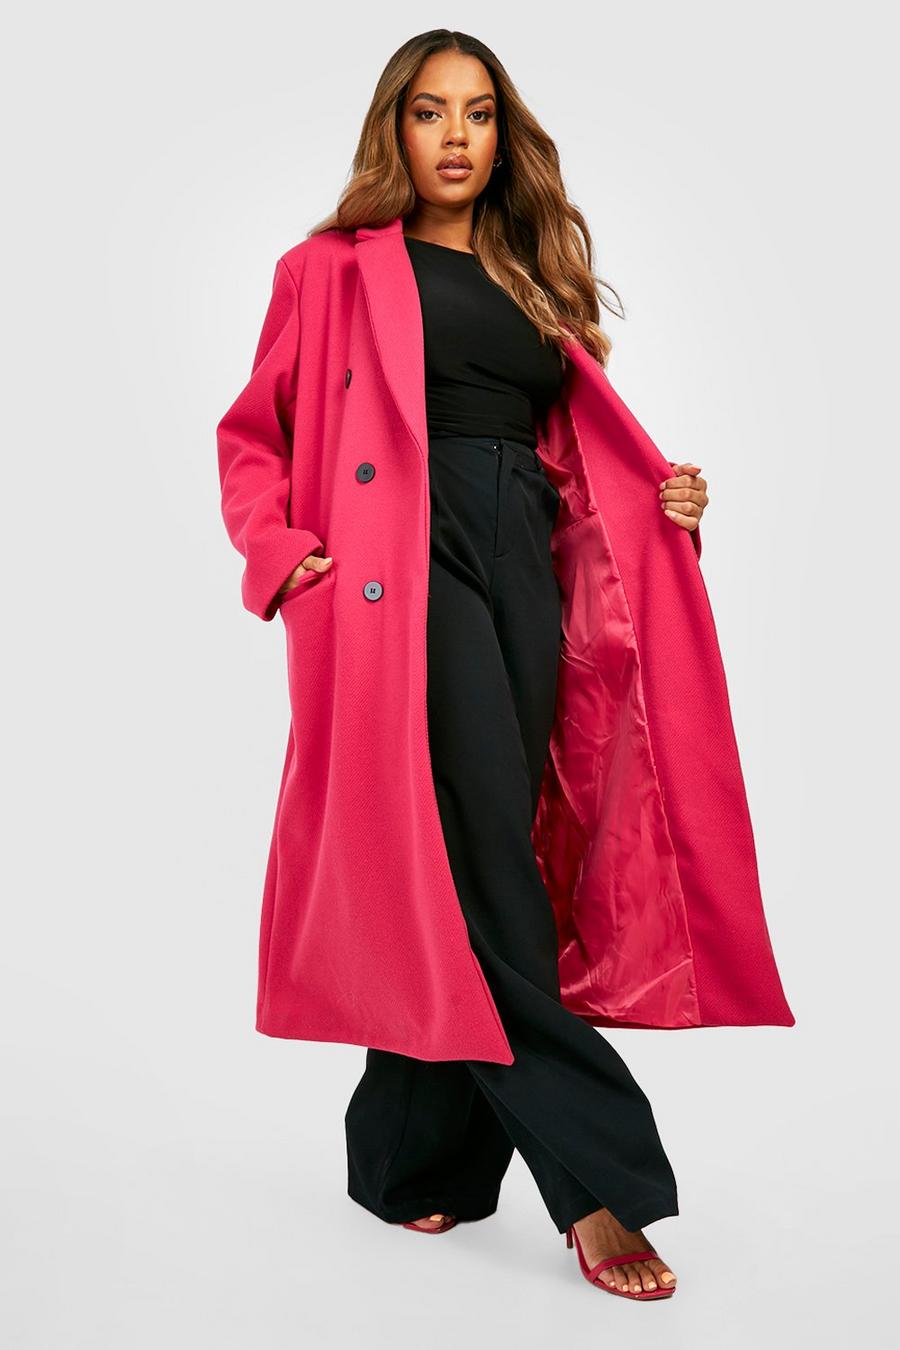 Cappotto Plus Size Premium effetto lana in colori accesi, Hot pink image number 1